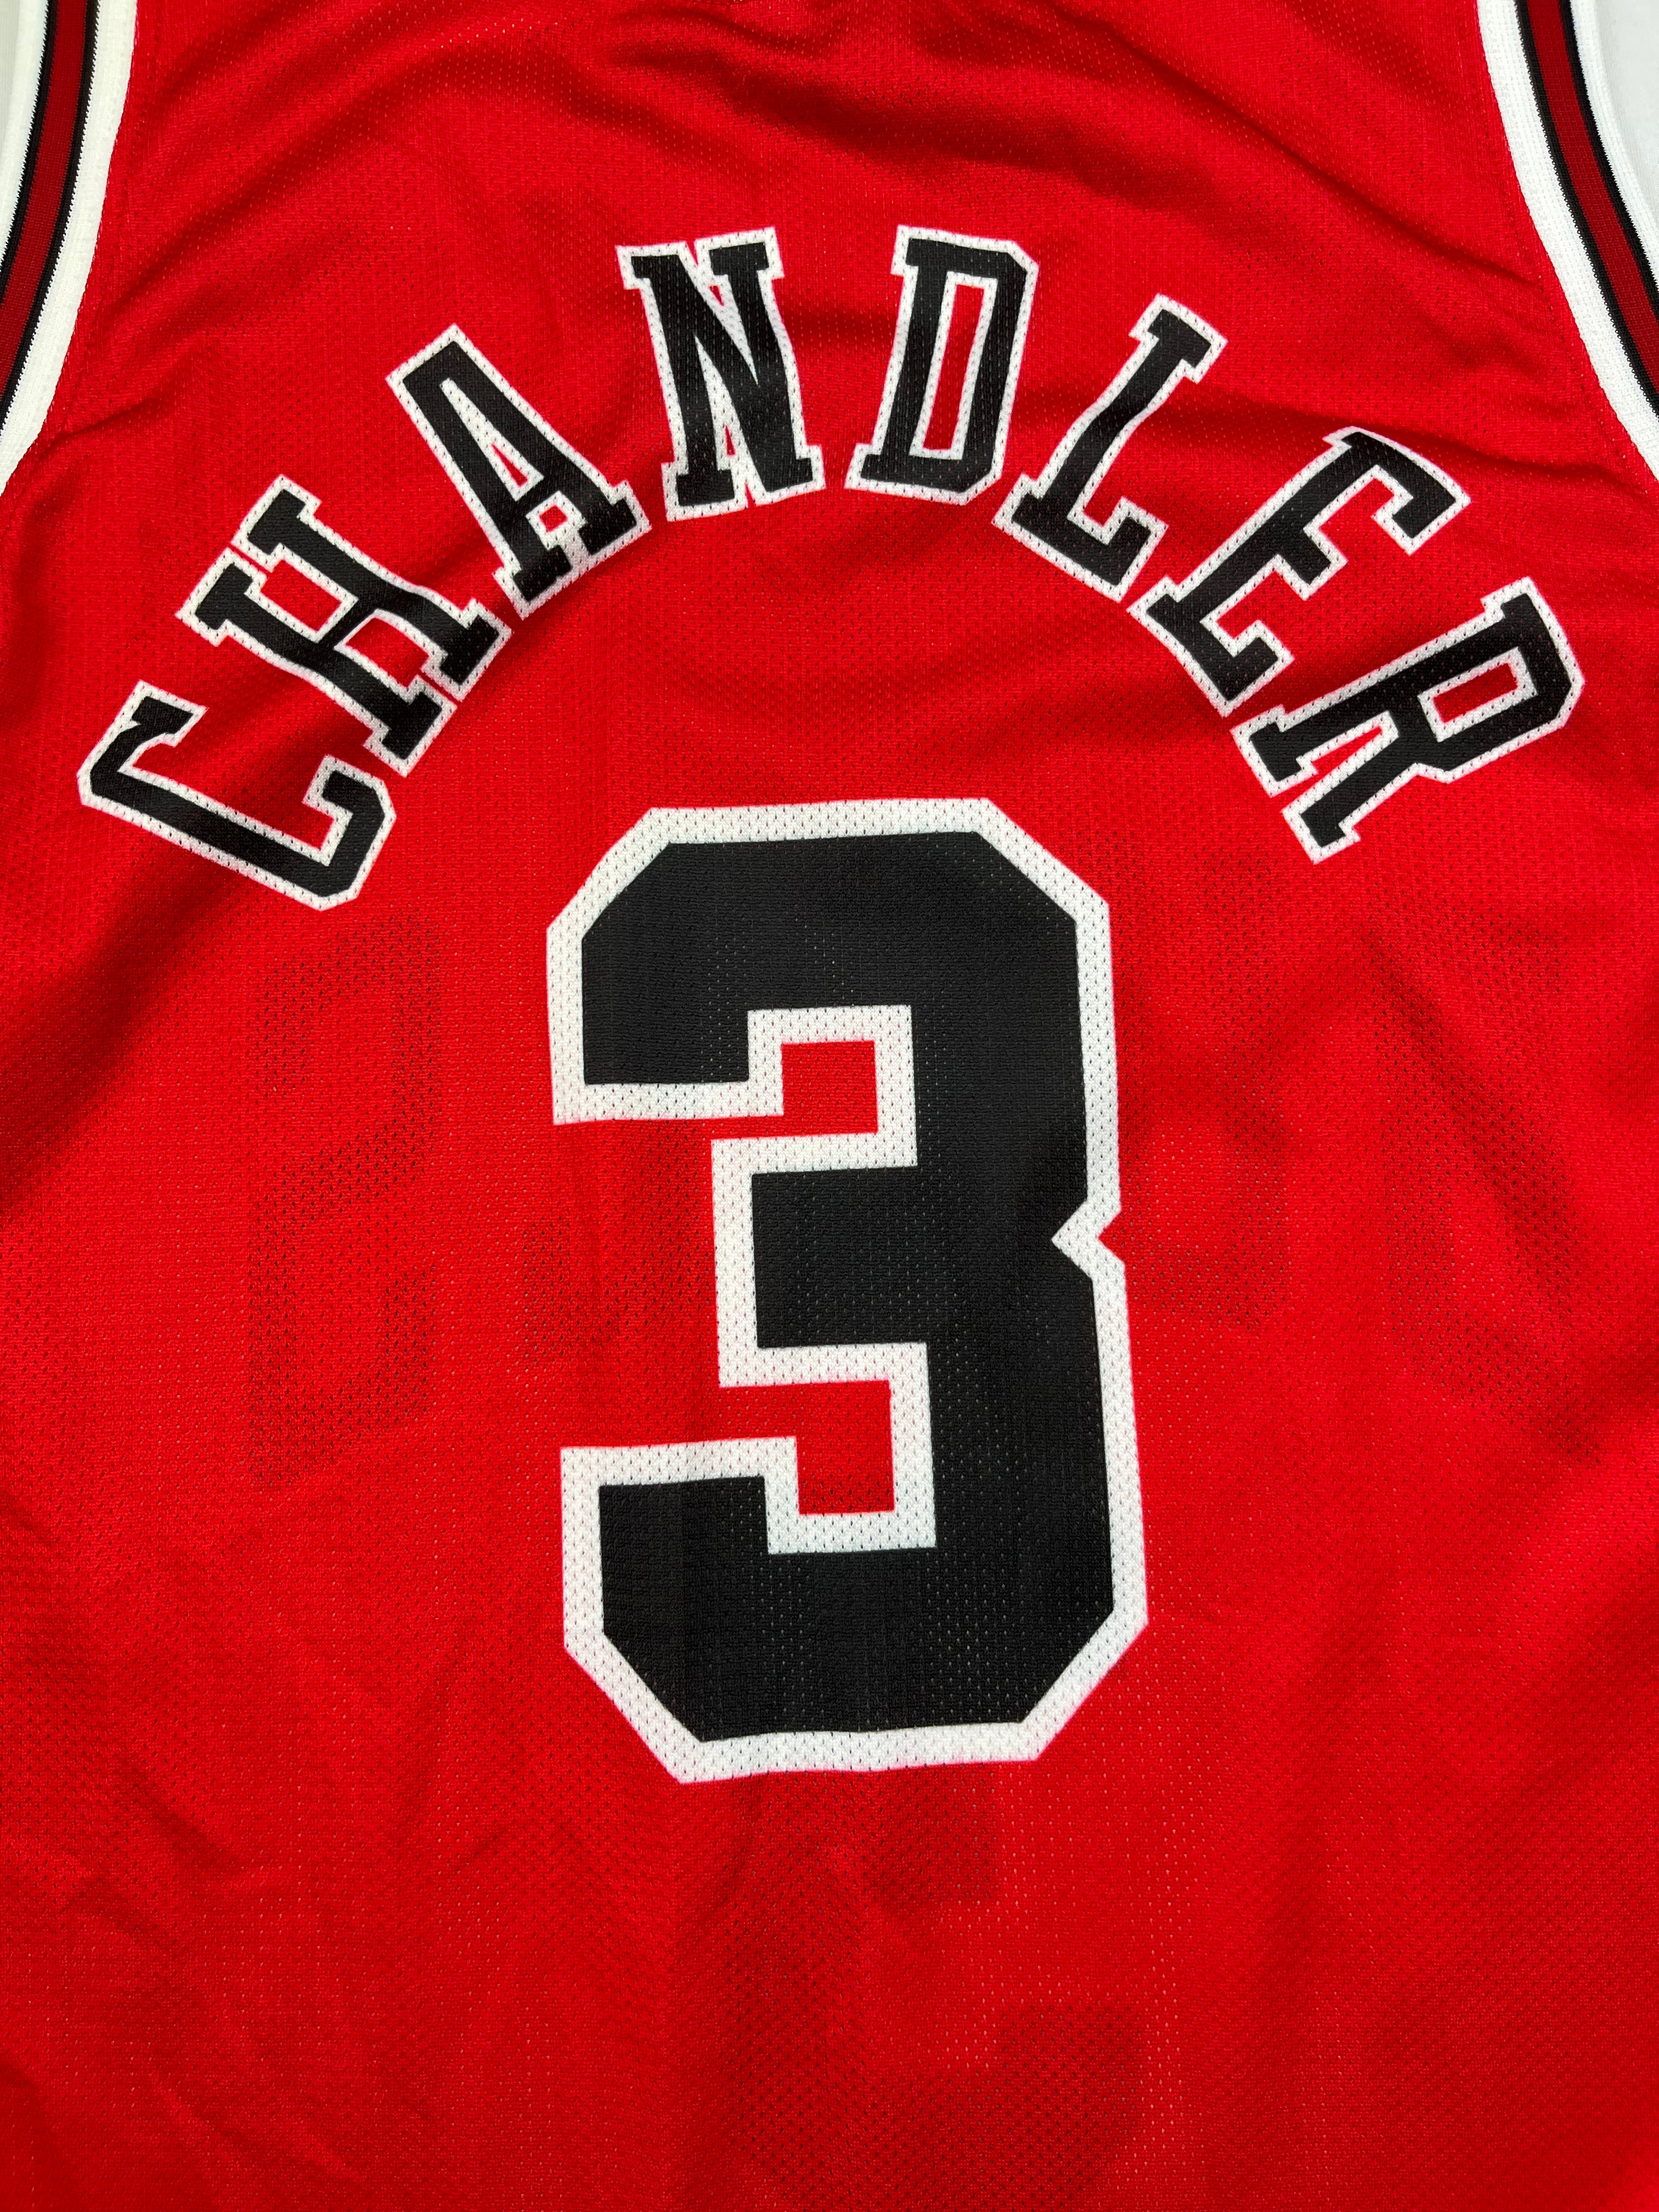 CHICAGO BULLS SHIRT CHAMPION JERSEY chandler #3 BASKETBALL RED s.L men  vintage